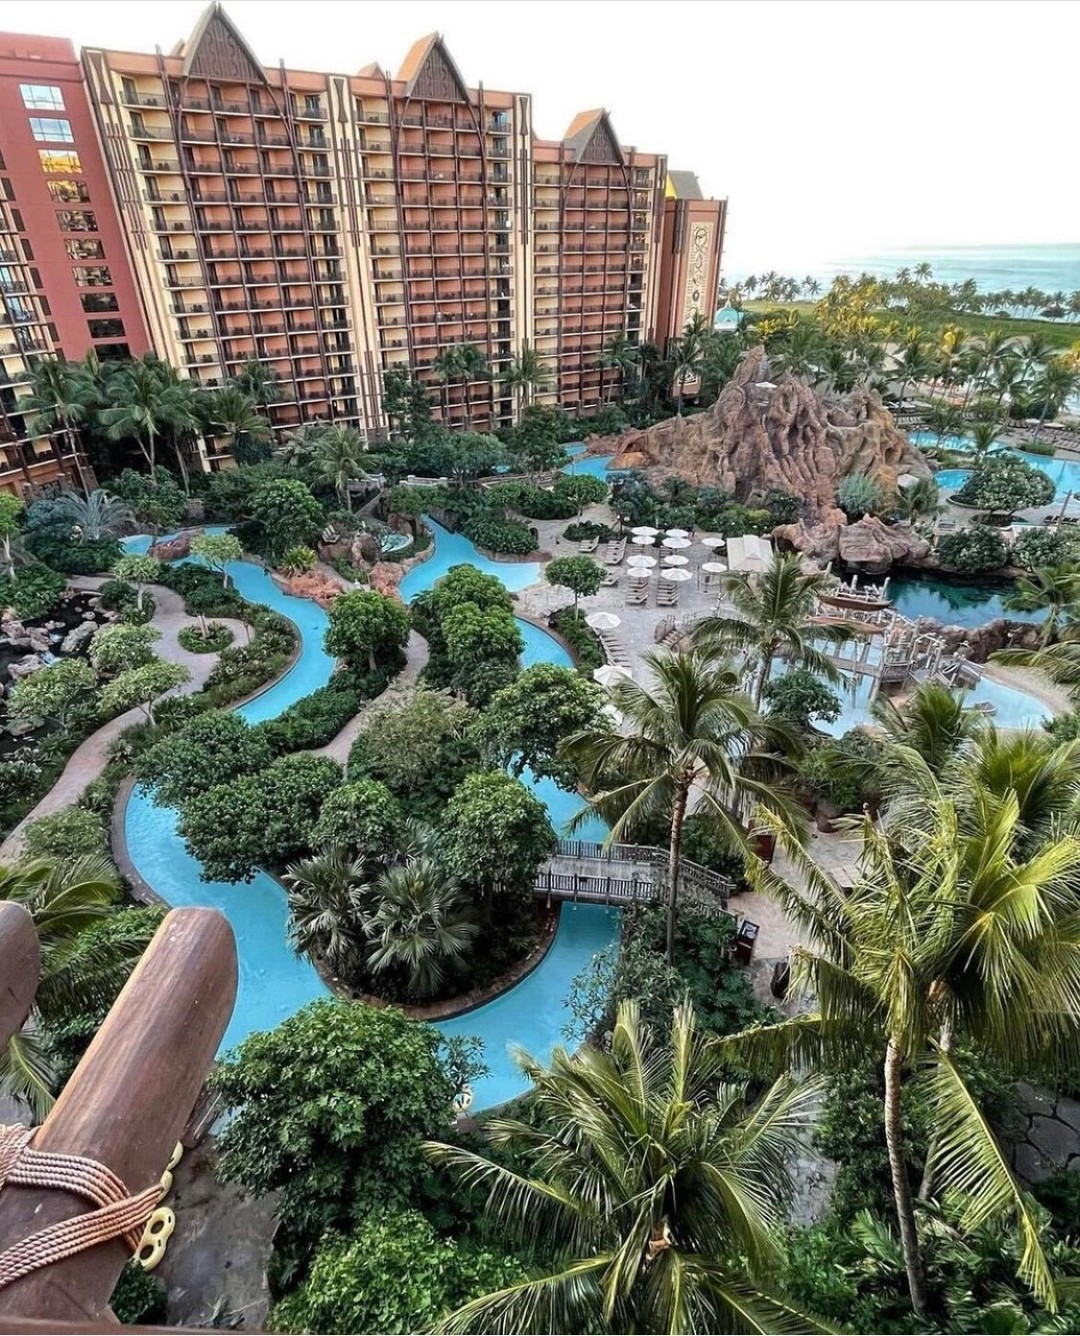 Disney Aulani Resort - Hotel da Disney no Havaí